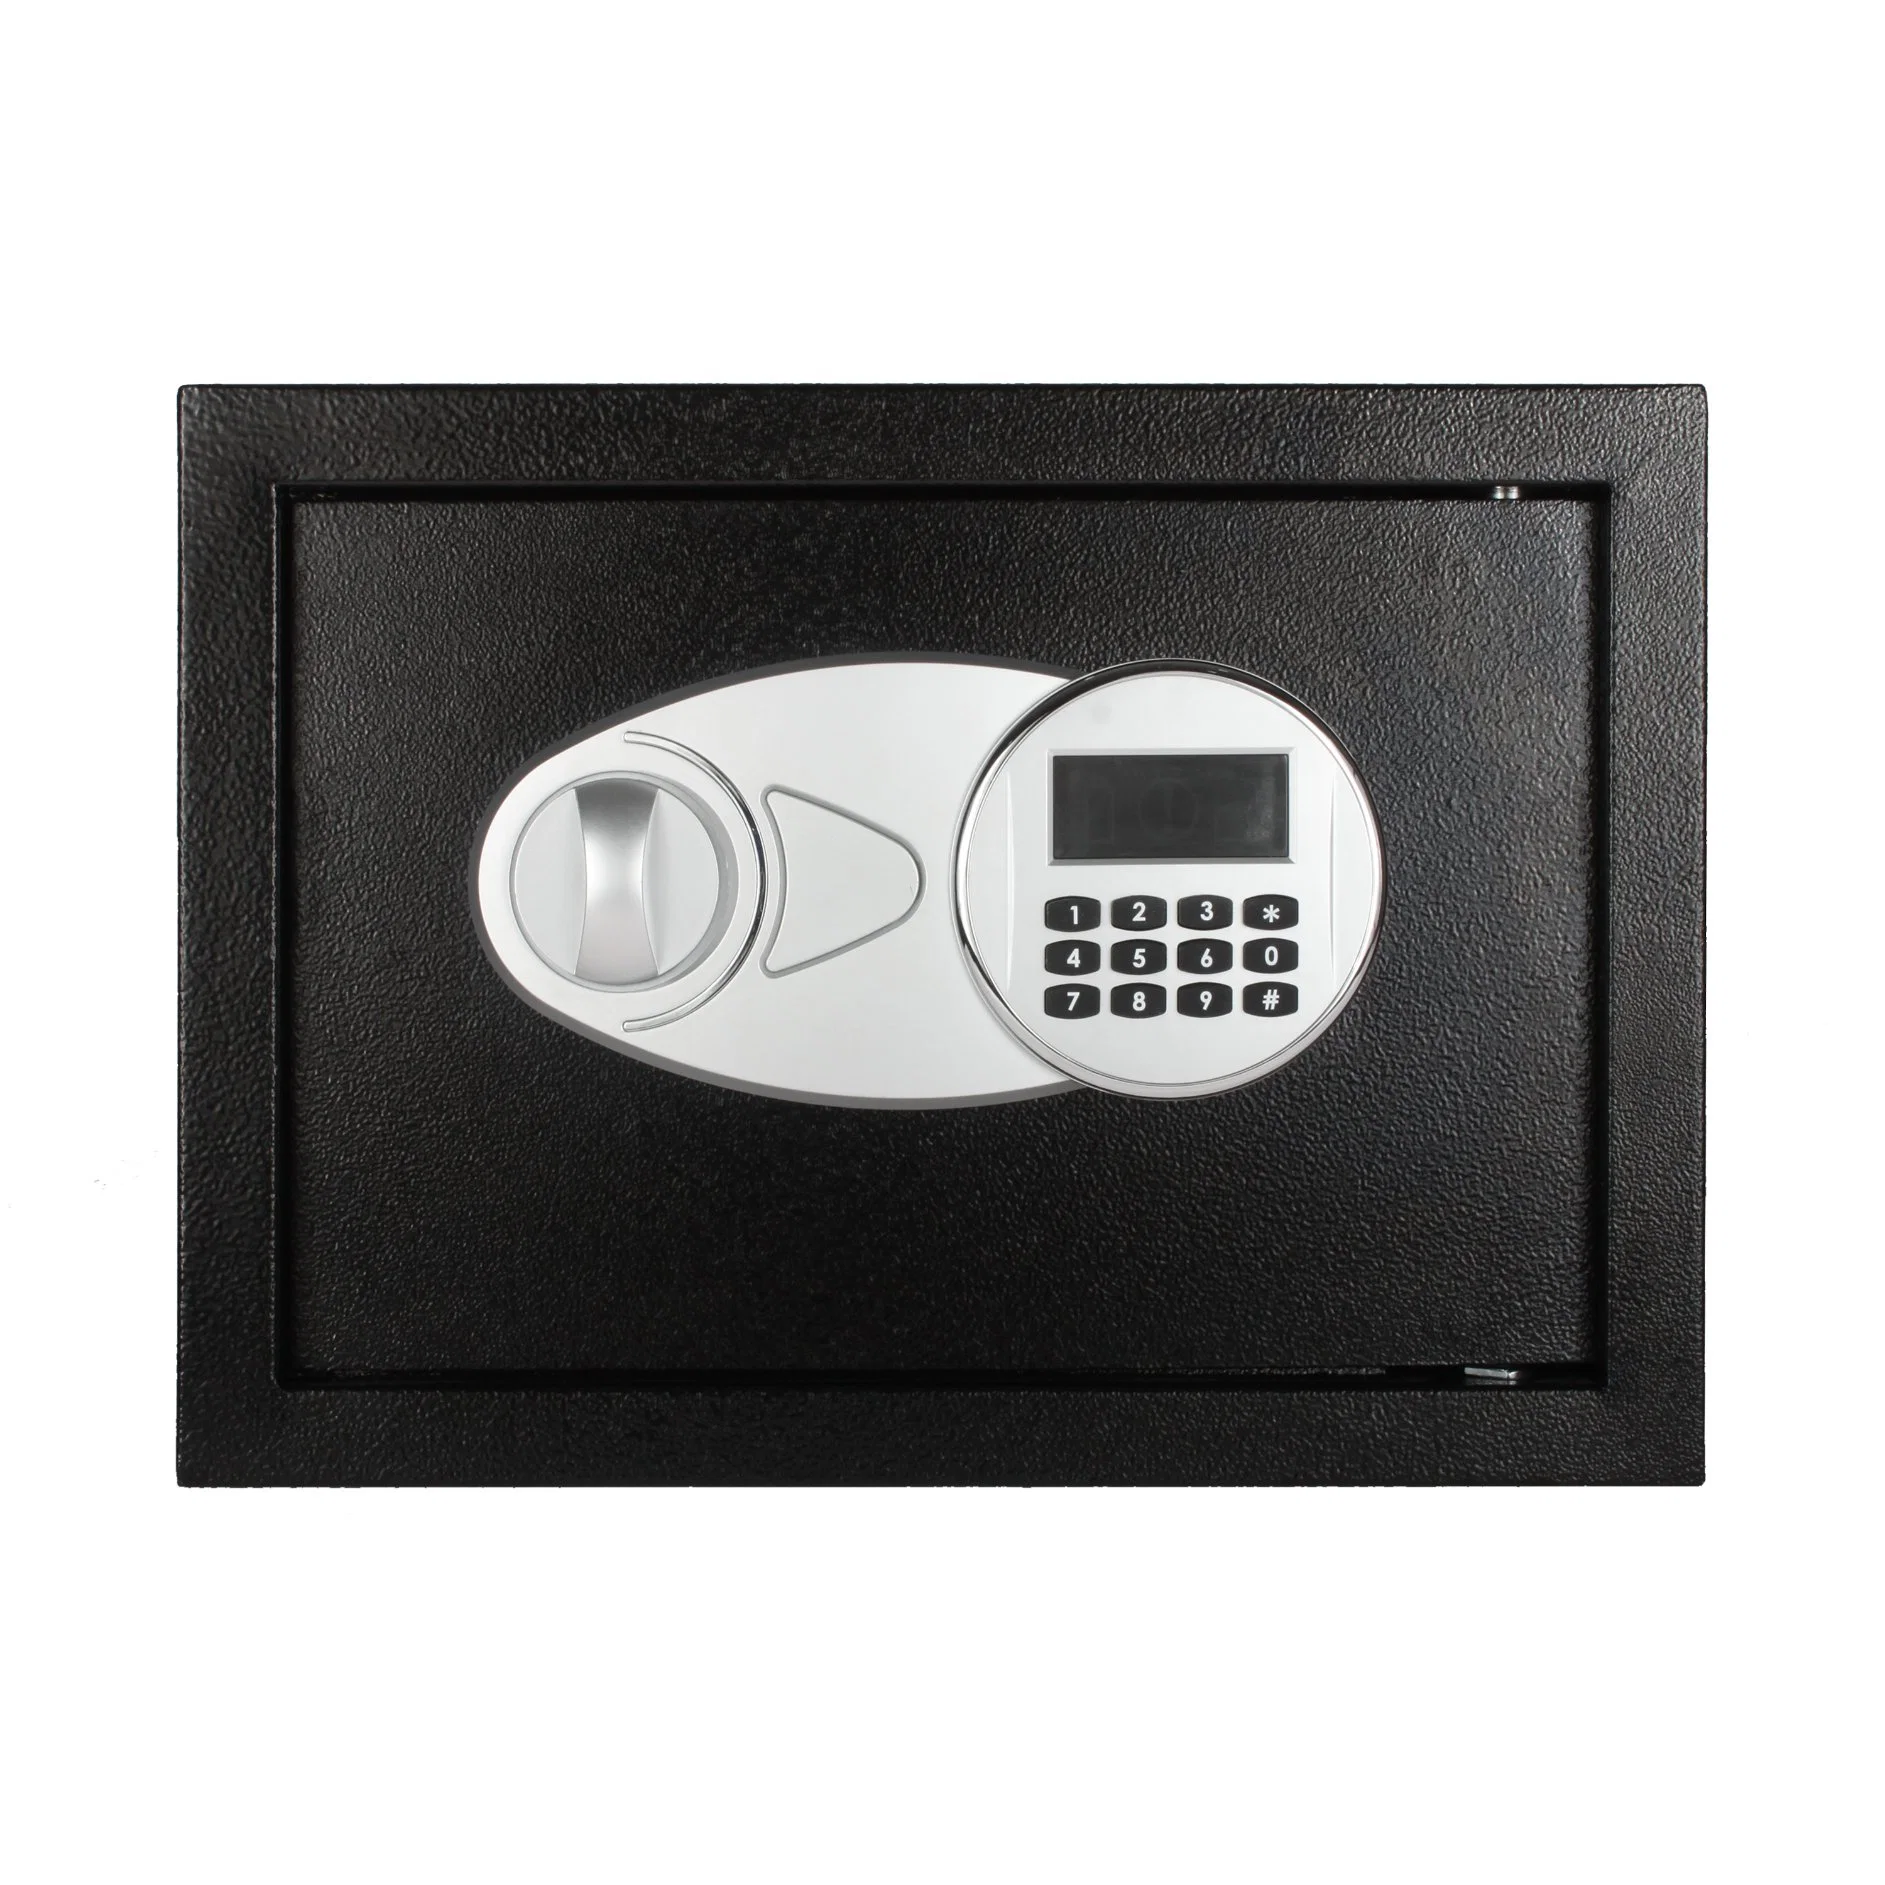 Mini Electronic Home Safe Box for Furniture in Wall Office Digital Big Room Safe Locker Laptop Security Small Secret Safes Box Hidden Design with Digital Lock